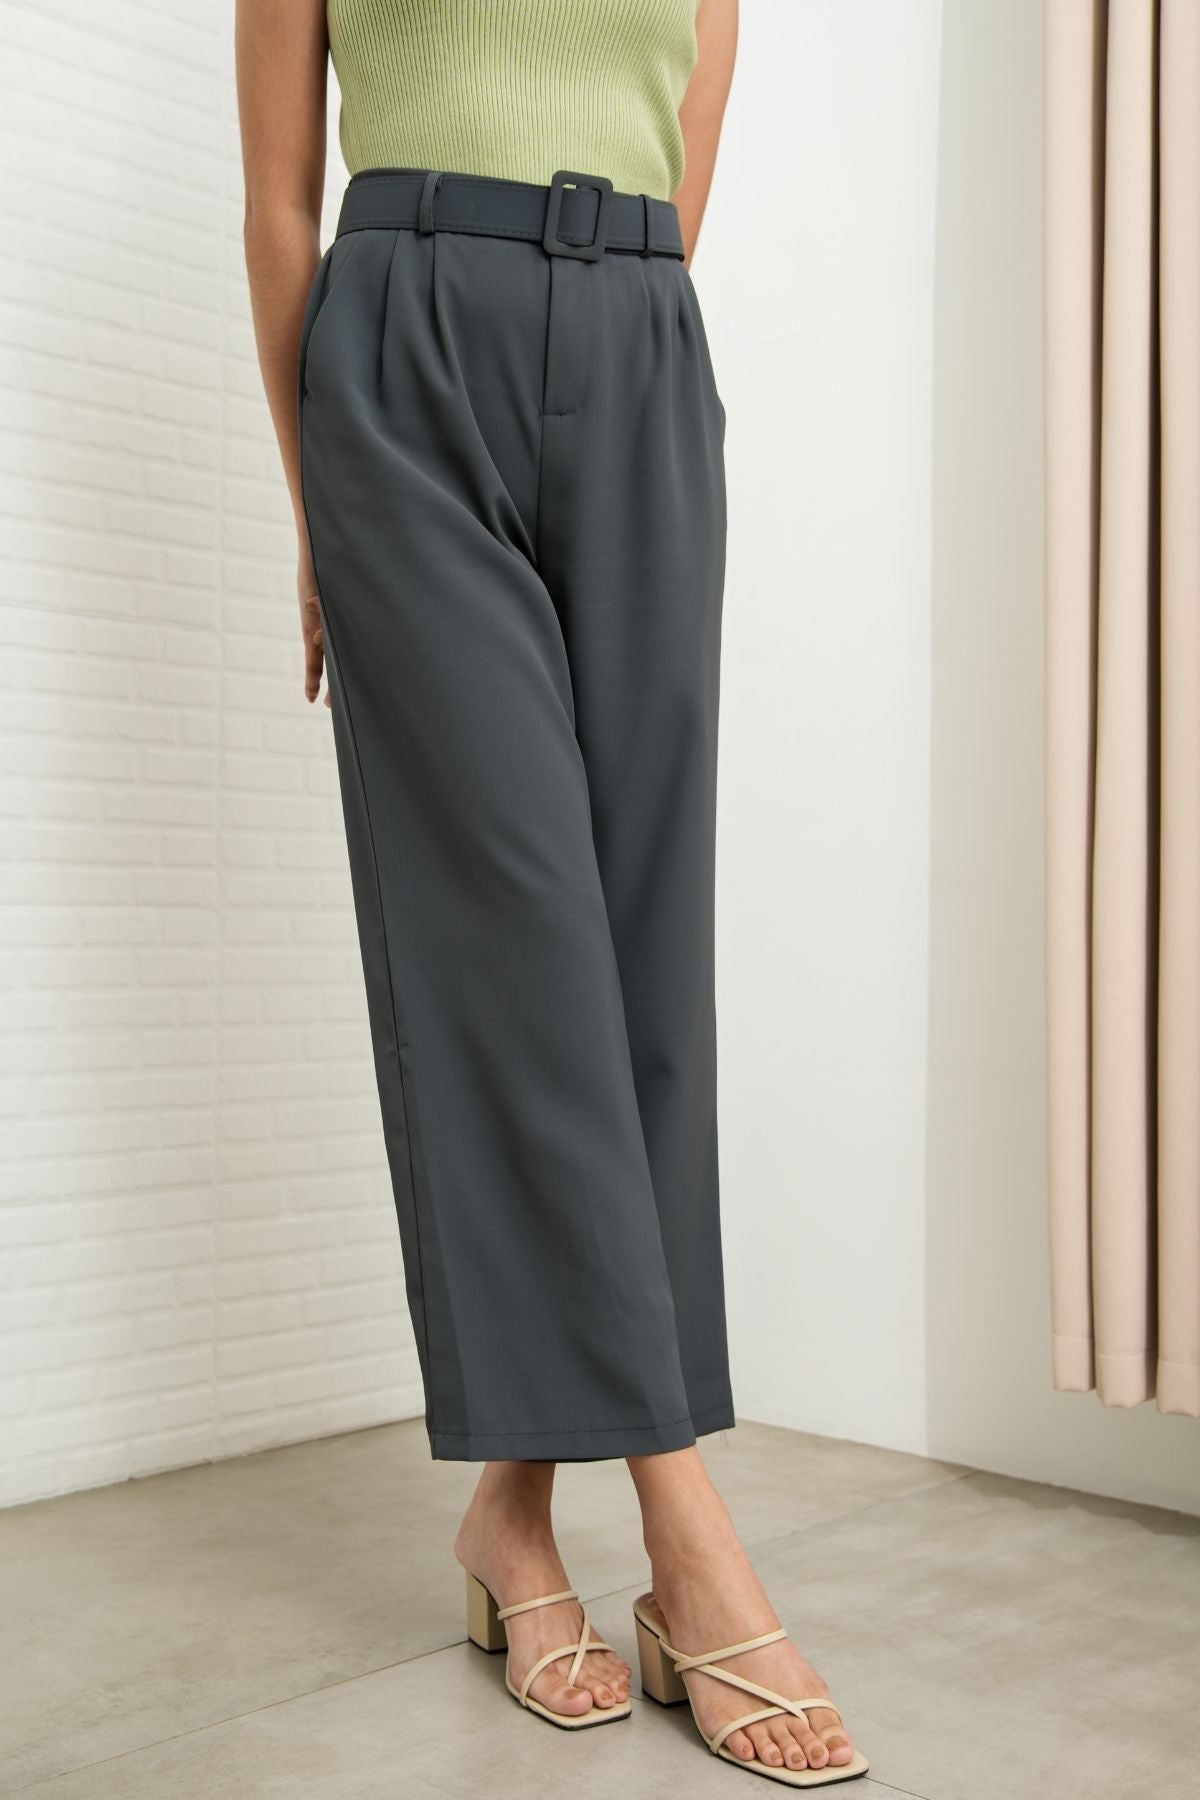 SASKIA Belted High-Waist Tailored Trousers (Steel Gray)